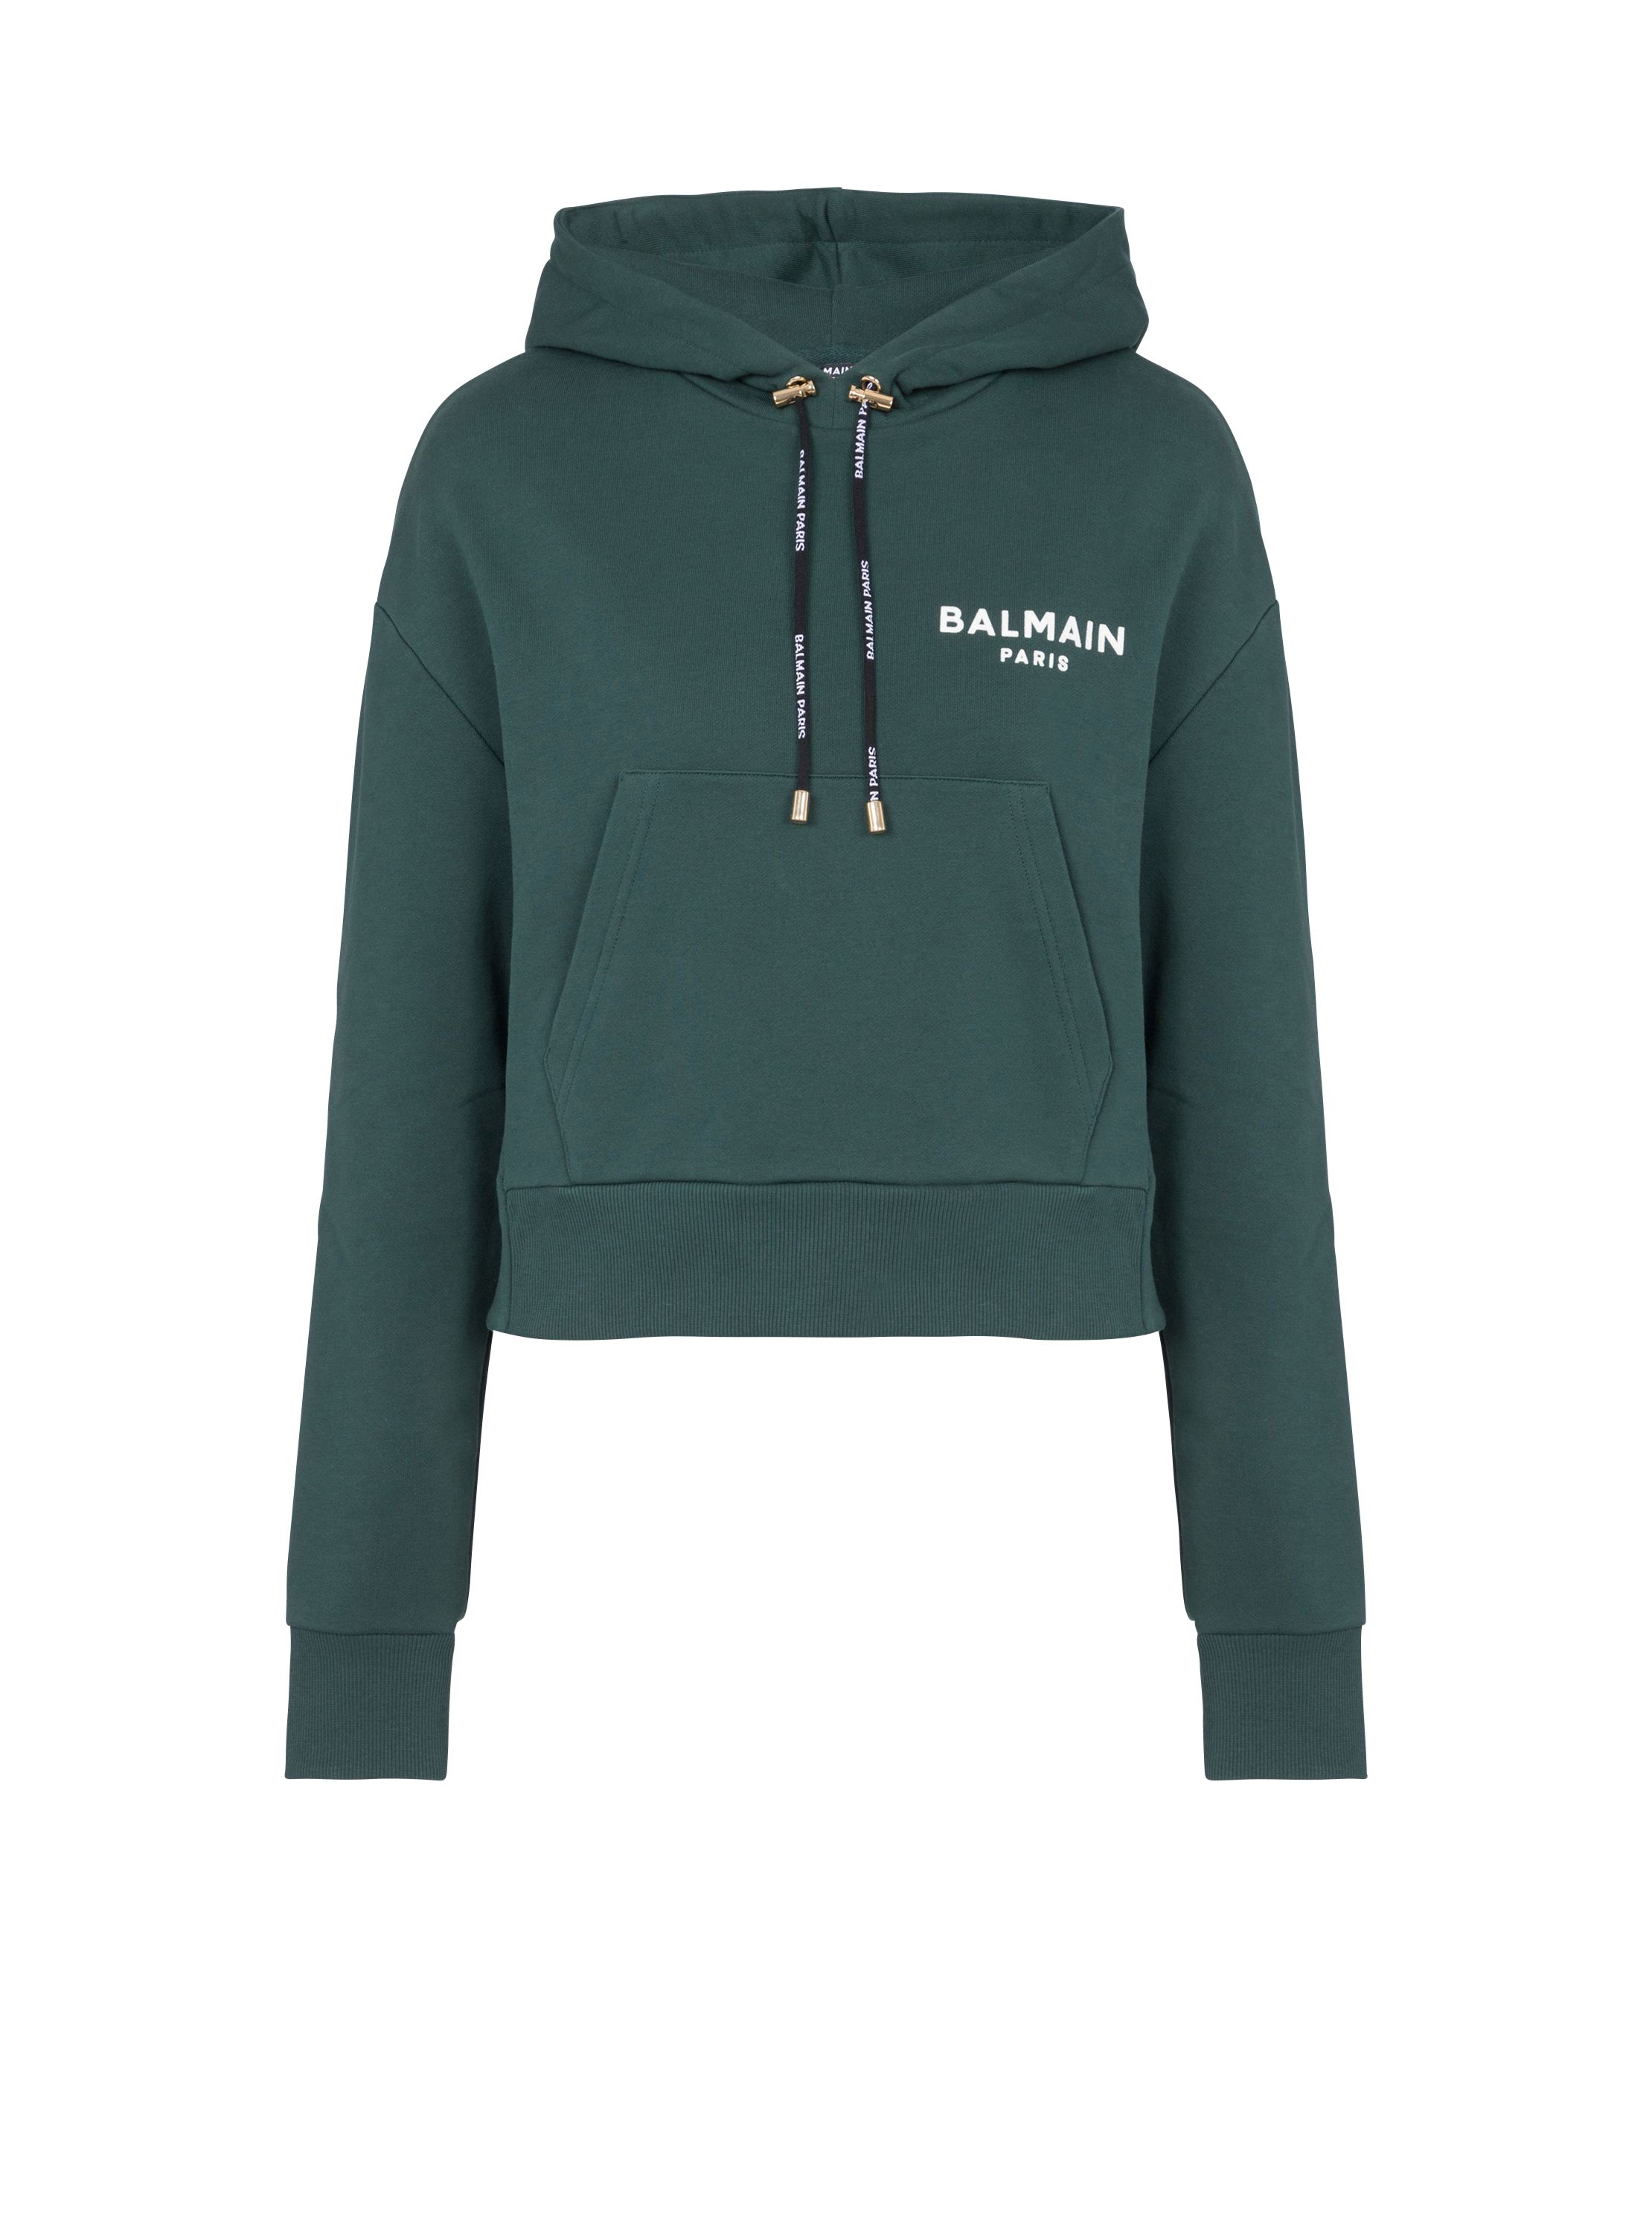 Sweatshirt with mini flocked Balmain Paris detail, green, hi-res